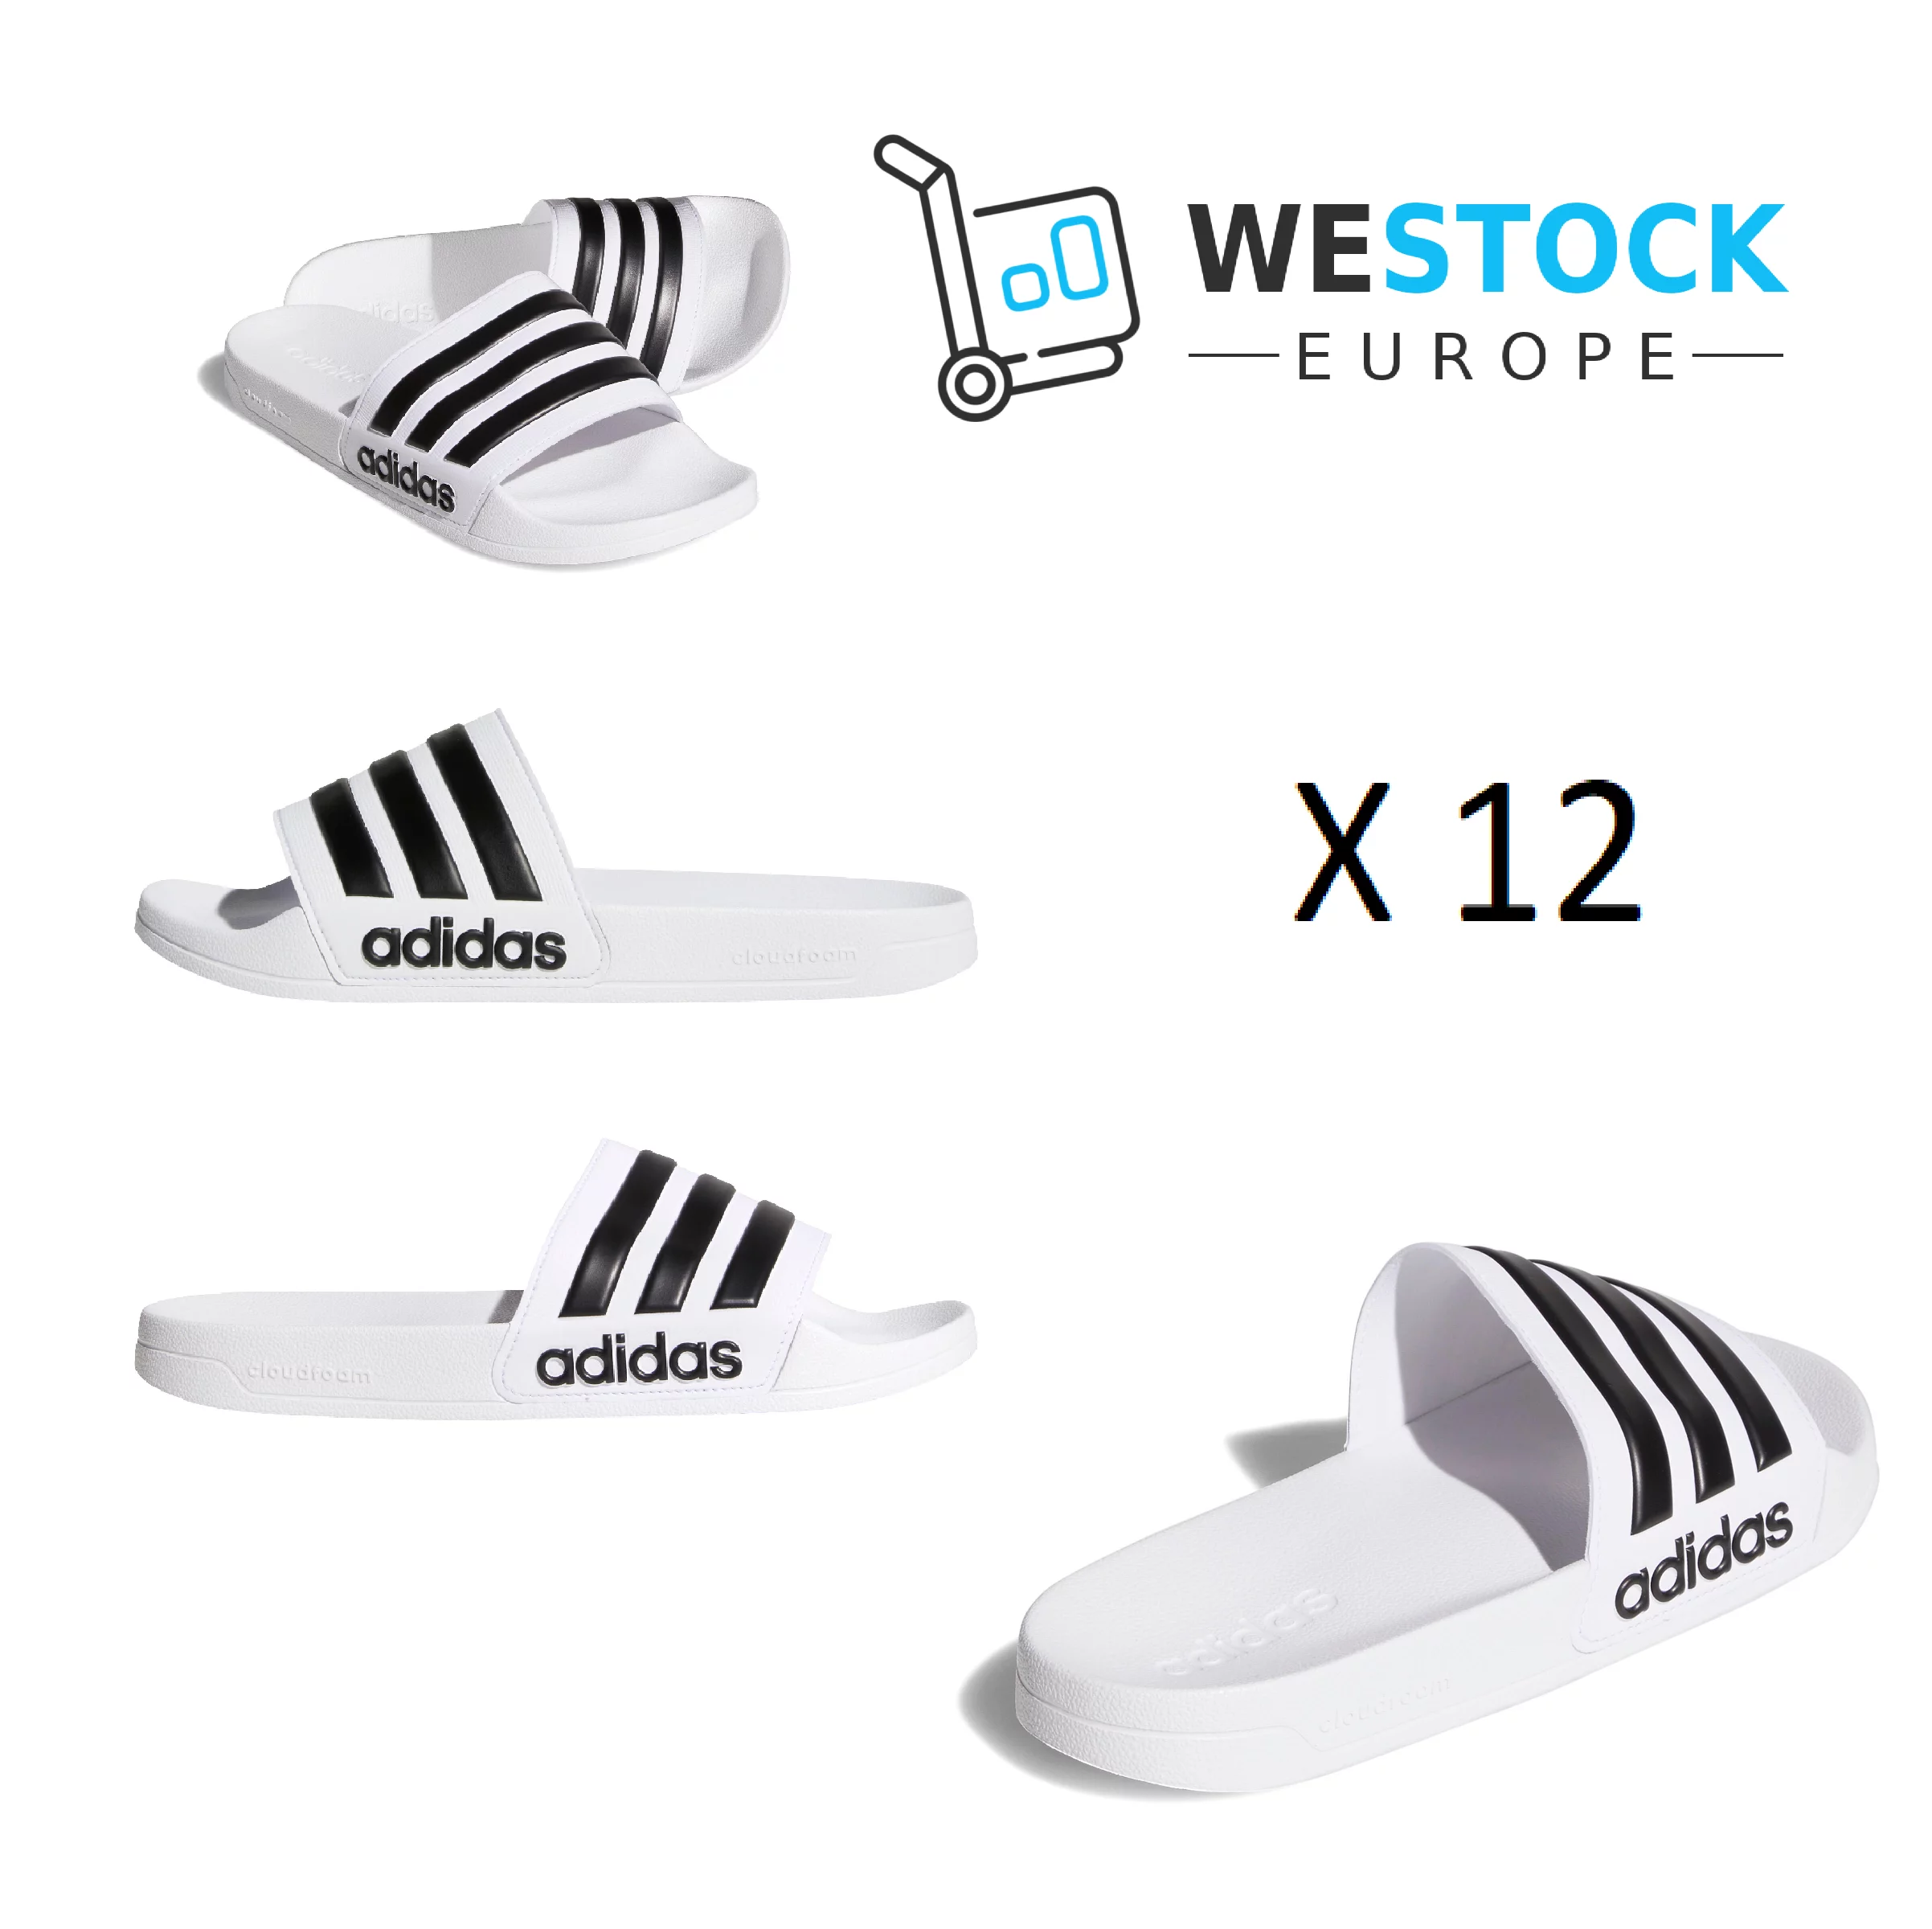 sandales-adidas-cloudfoam-adilette-blanc-noir-bl-westock